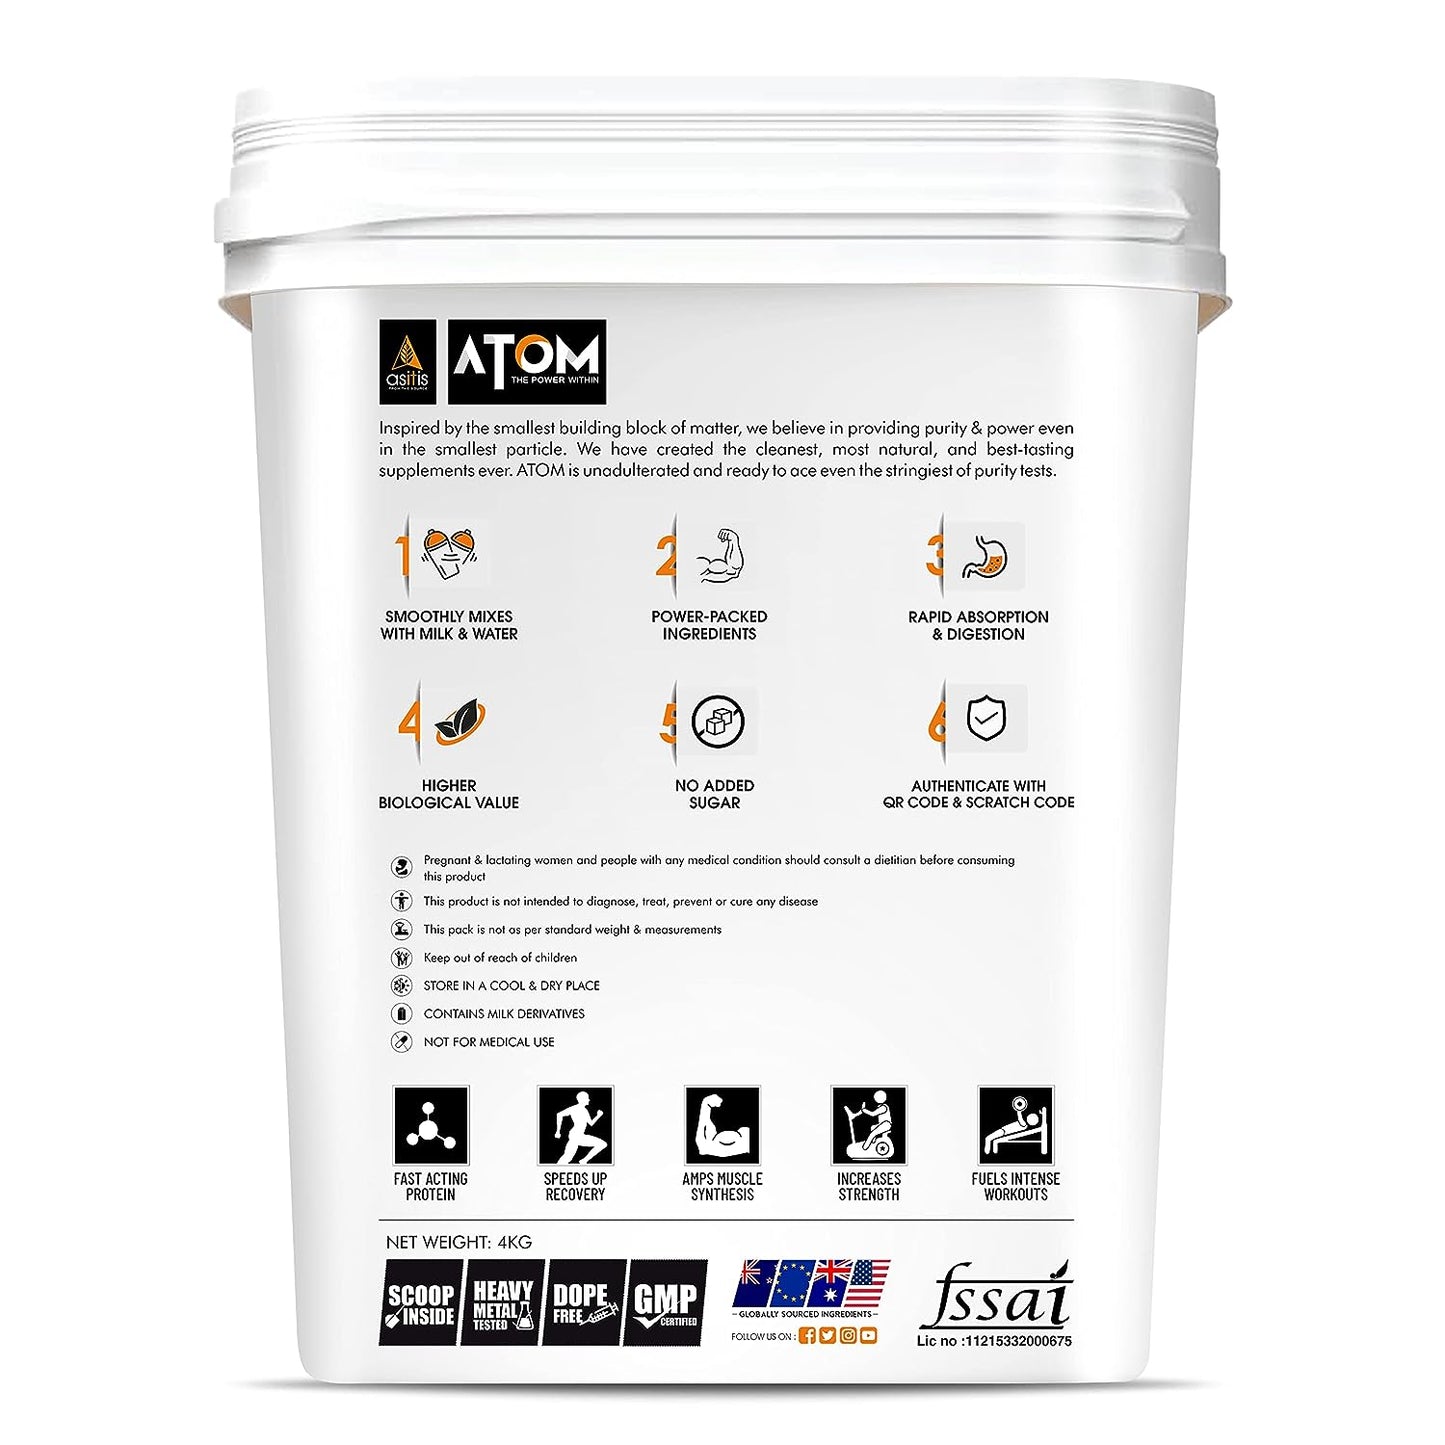 As-it-is ATOM Whey Protein Powder